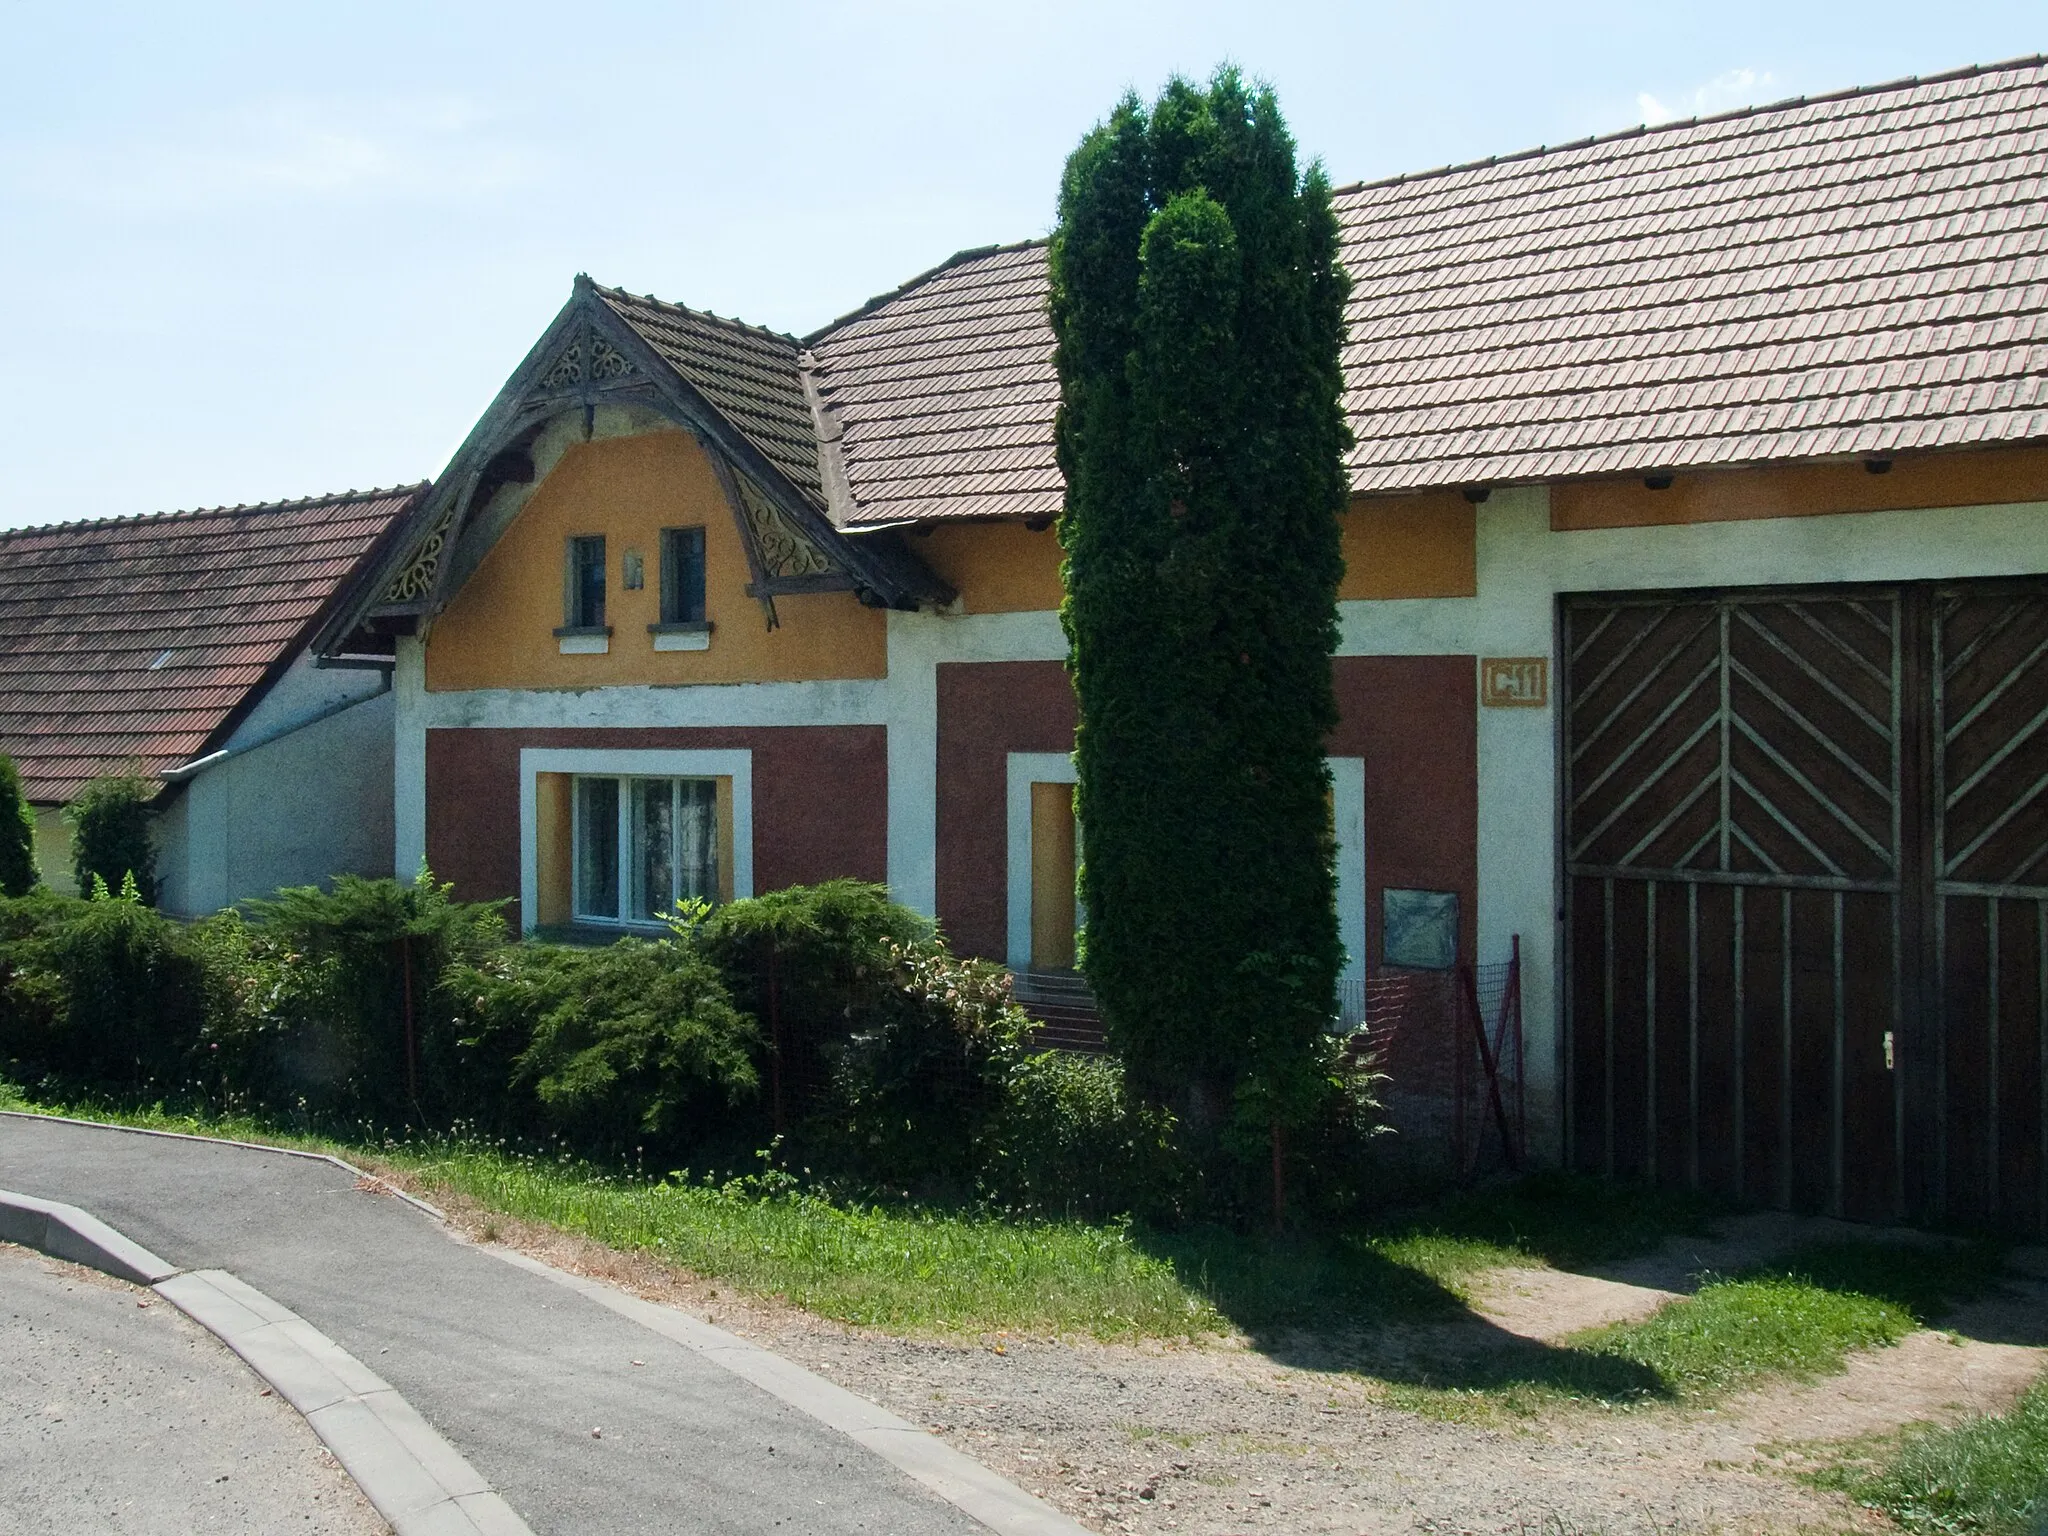 Photo showing: House No 11 in the village of Kladruby, Benešov district, Czech Republic